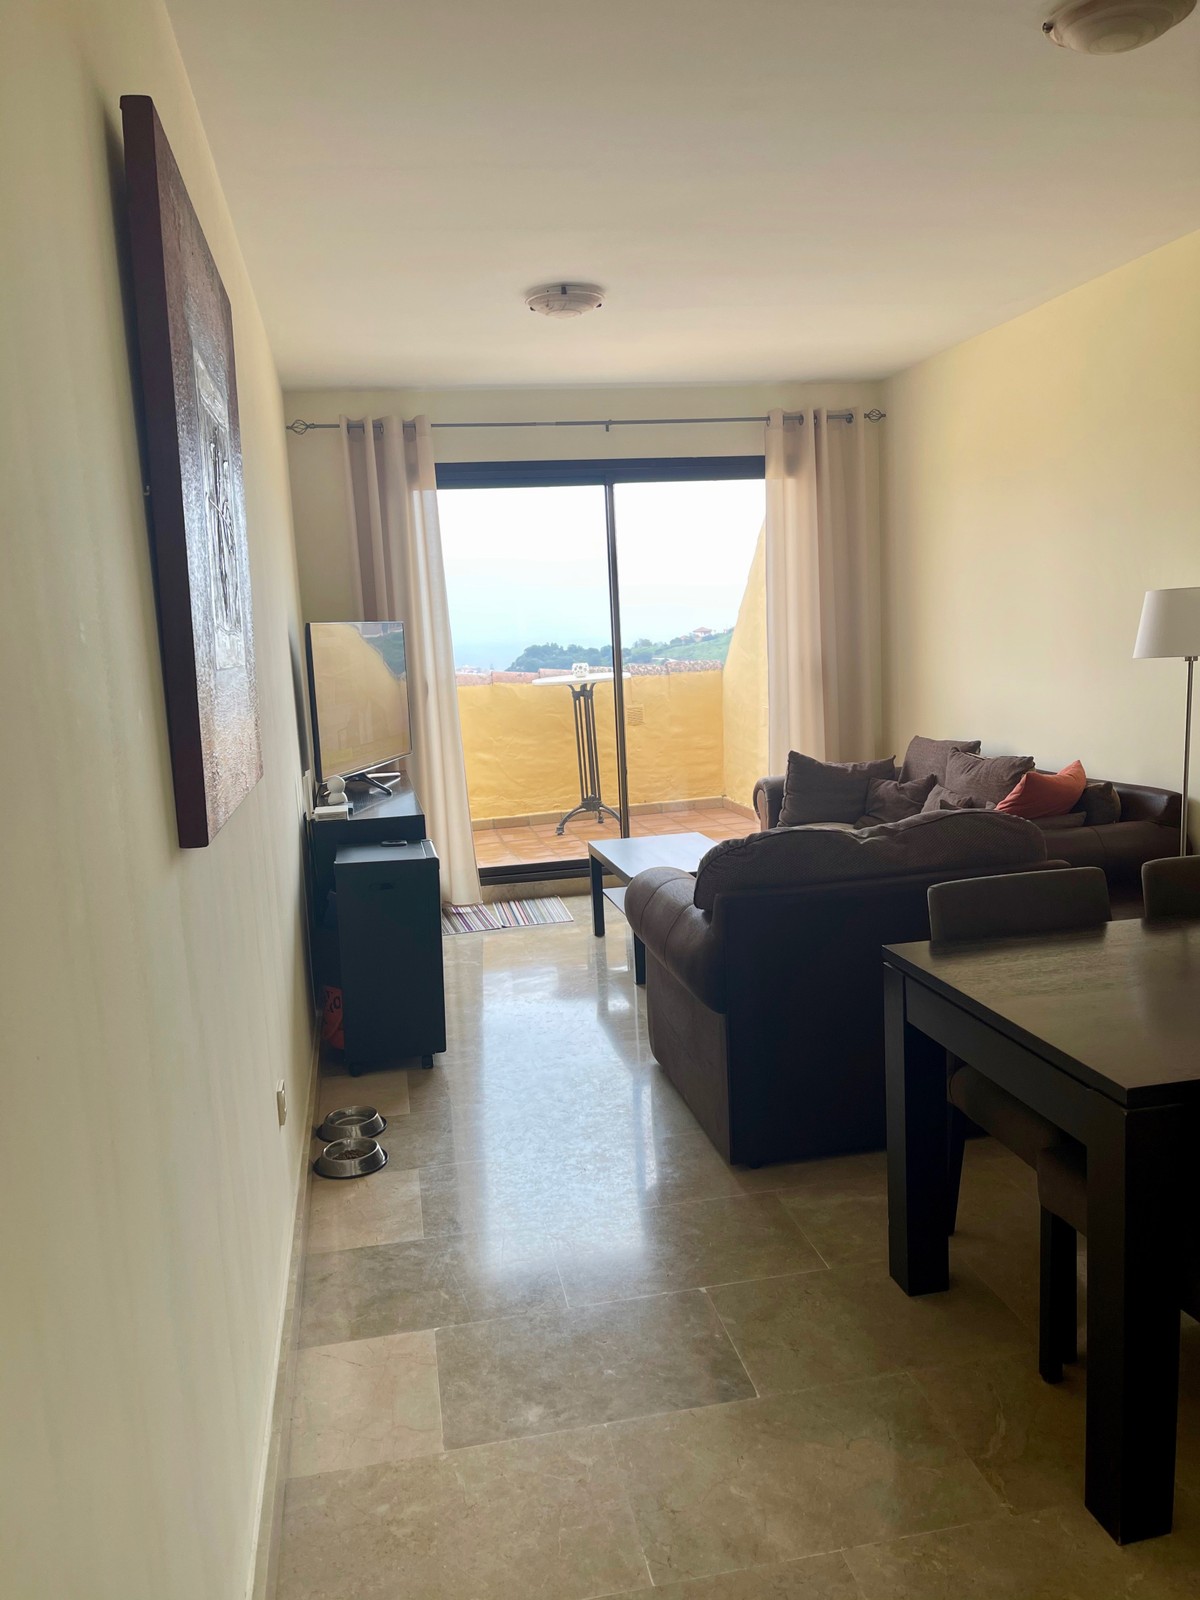 2 bedroom apartment in La Duquesa for rent next to golf courses - mibgroup.es